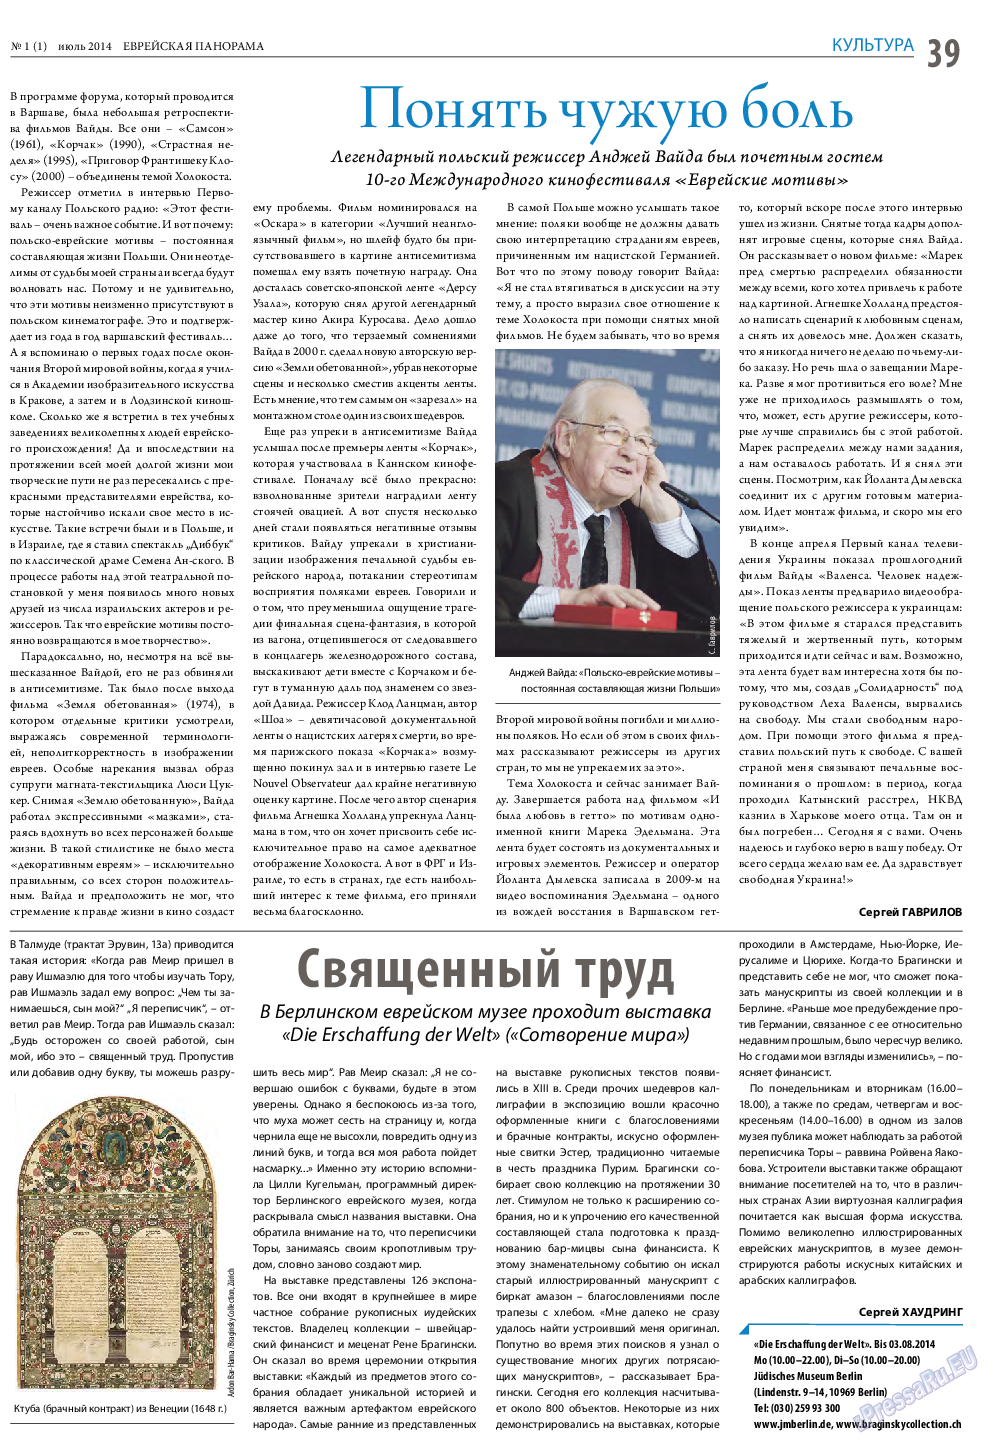 Еврейская панорама, газета. 2014 №1 стр.39